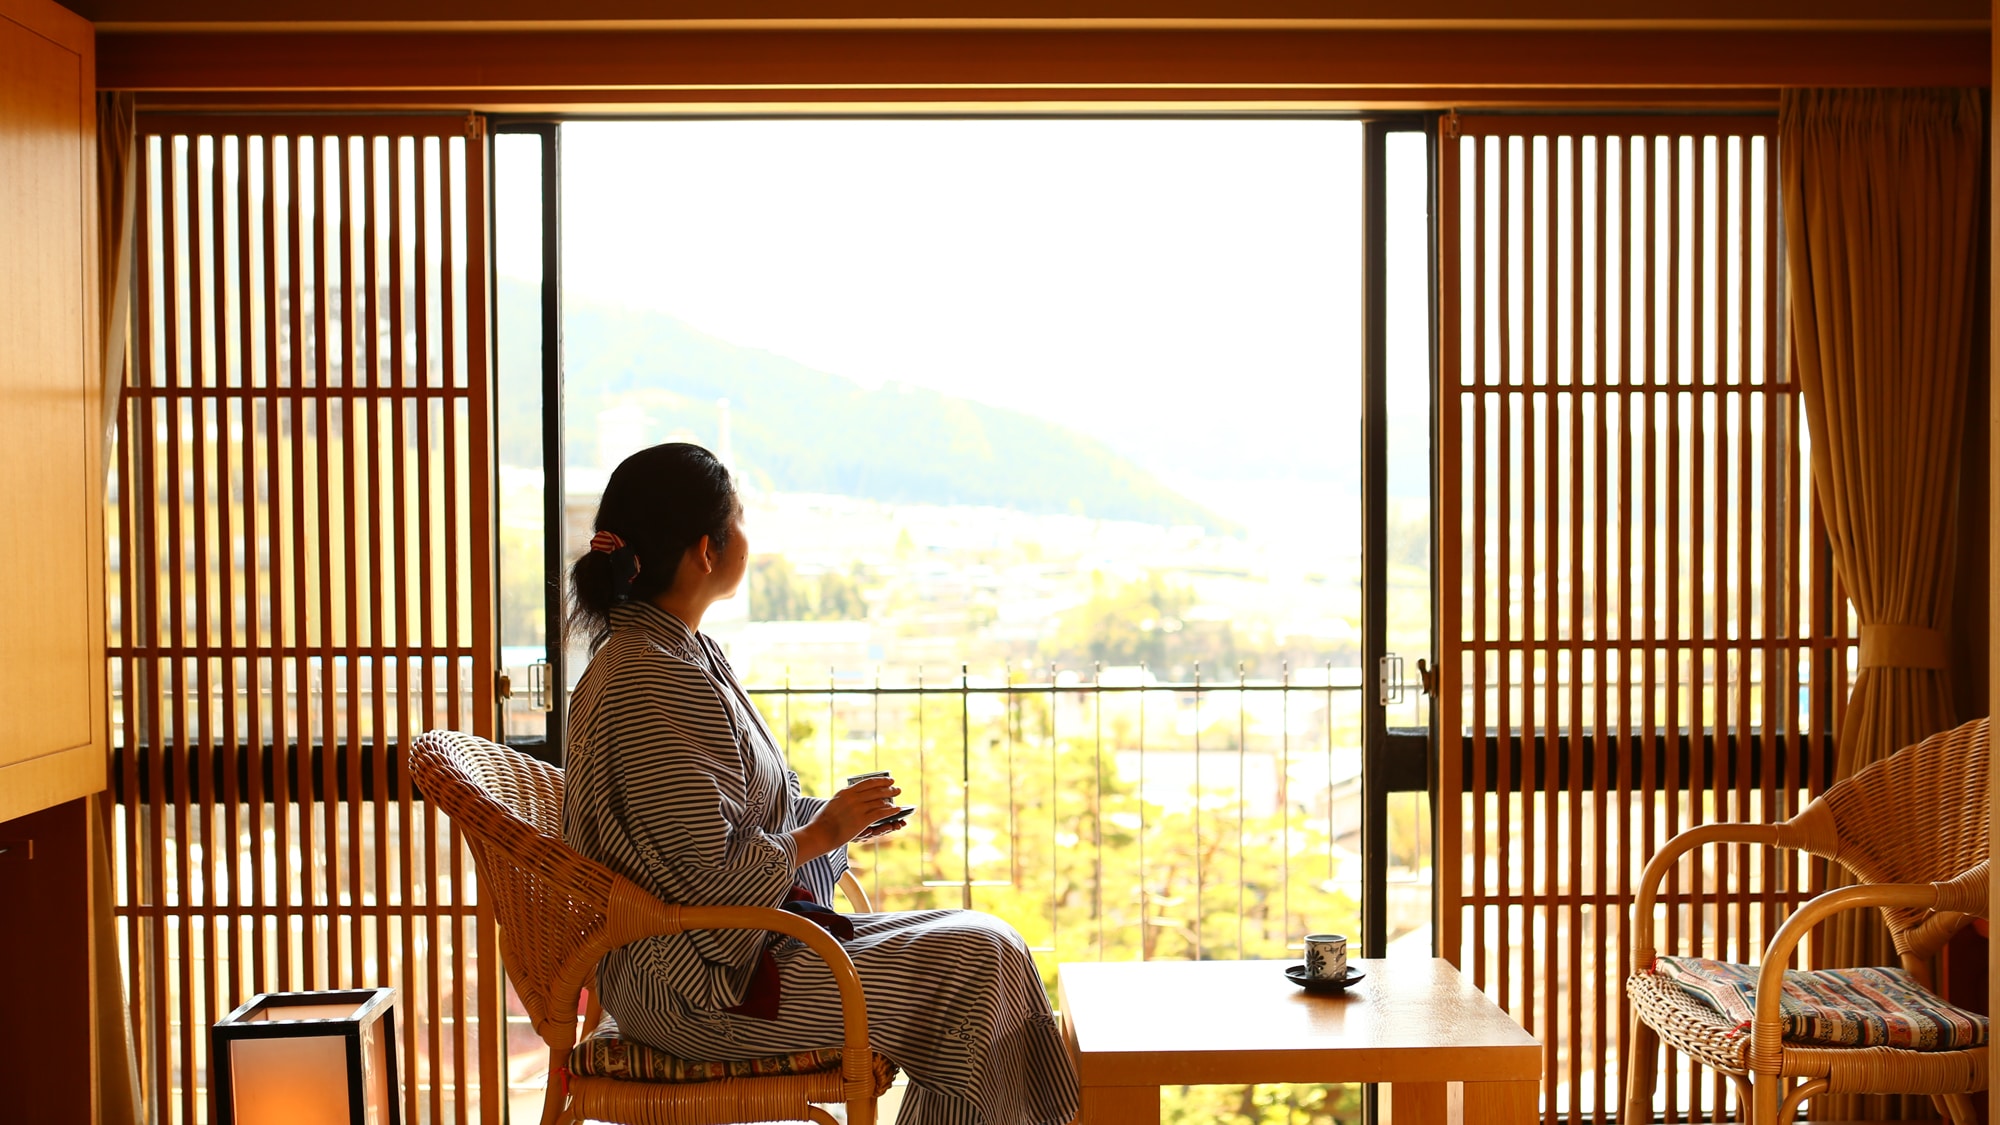 [10 + 7 tatami mats] Please change into a yukata and relax.